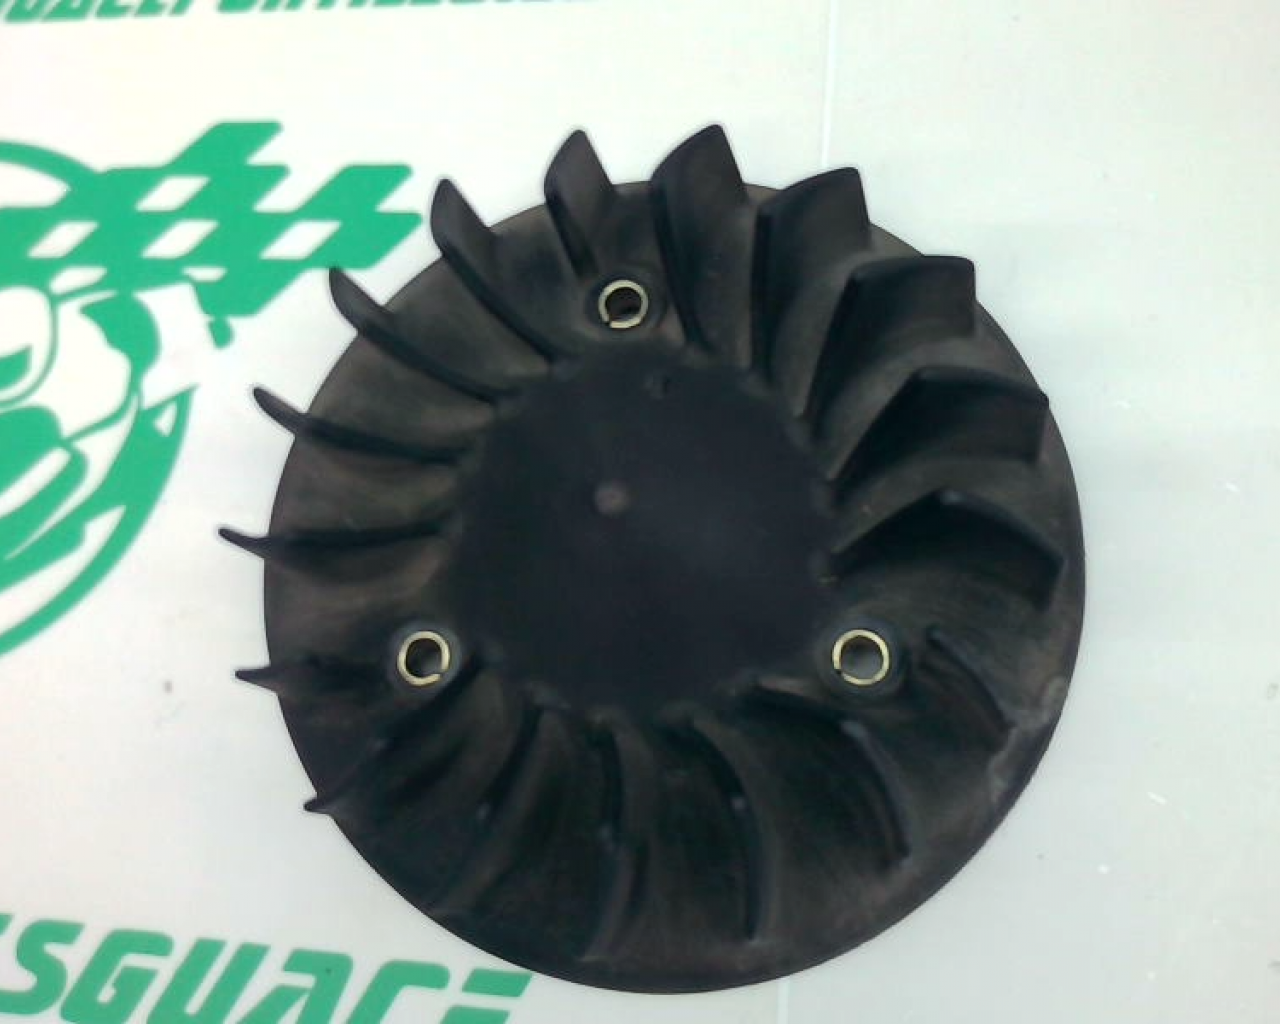 Ventilador del plato magnetico Piaggio FLY 50 2T (2005-2007)